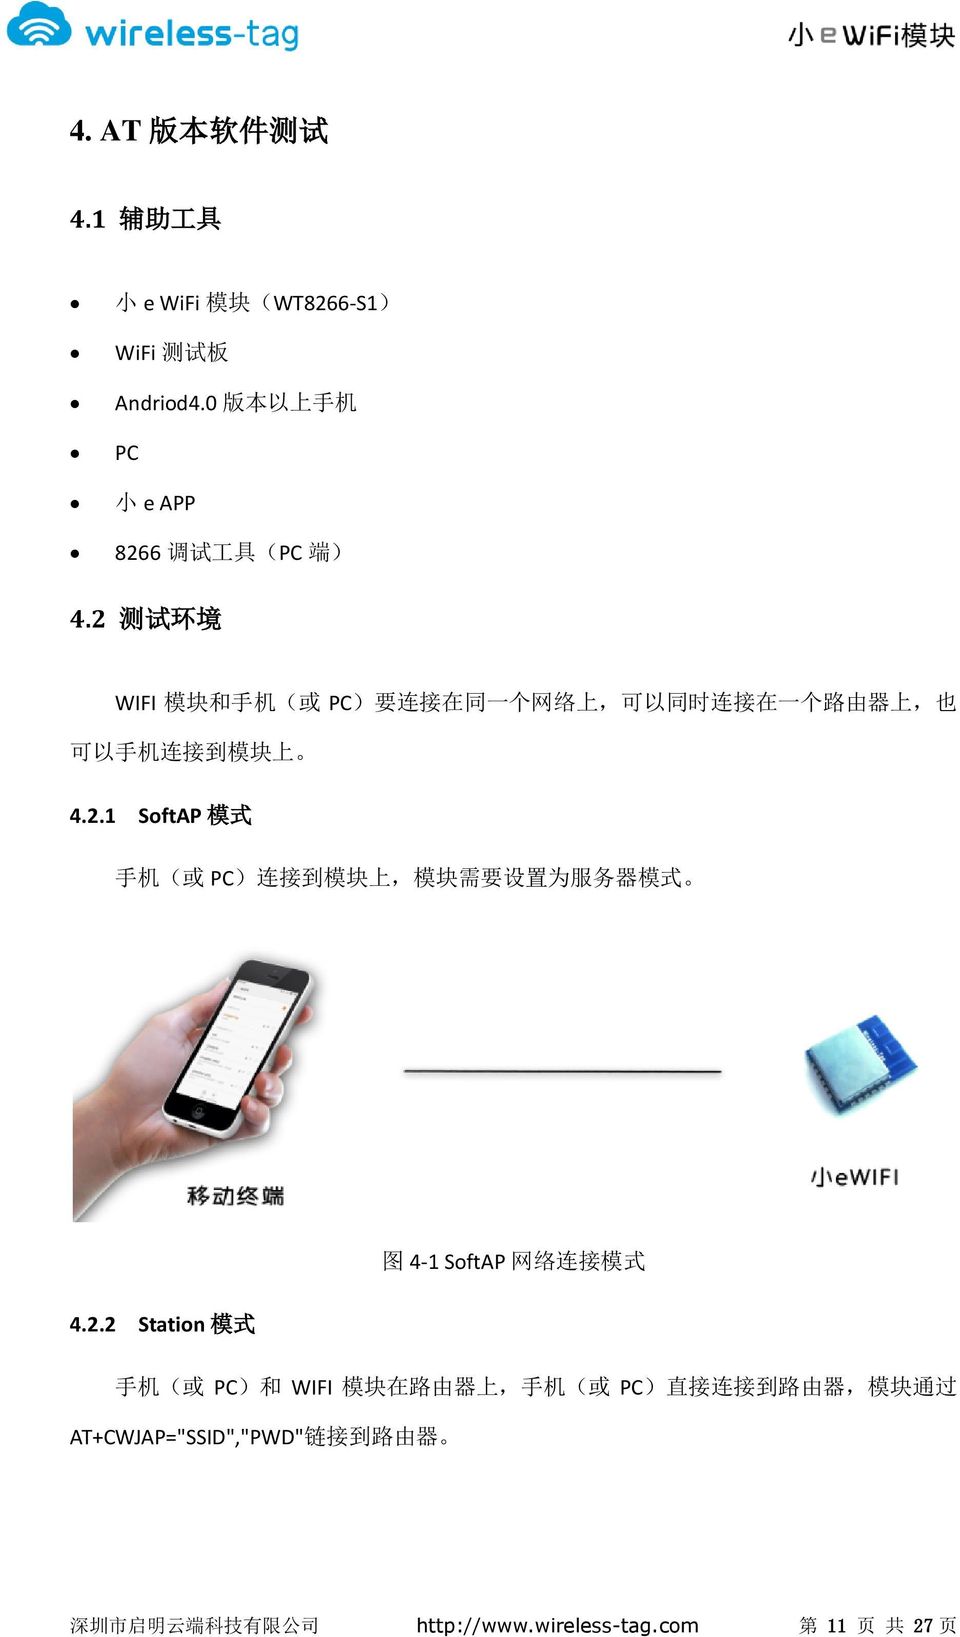 2.2 Station 模 式 手 机 ( 或 PC) 和 WIFI 模 块 在 路 由 器 上, 手 机 ( 或 PC) 直 接 连 接 到 路 由 器, 模 块 通 过 AT+CWJAP="SSID","PWD" 链 接 到 路 由 器 深 圳 市